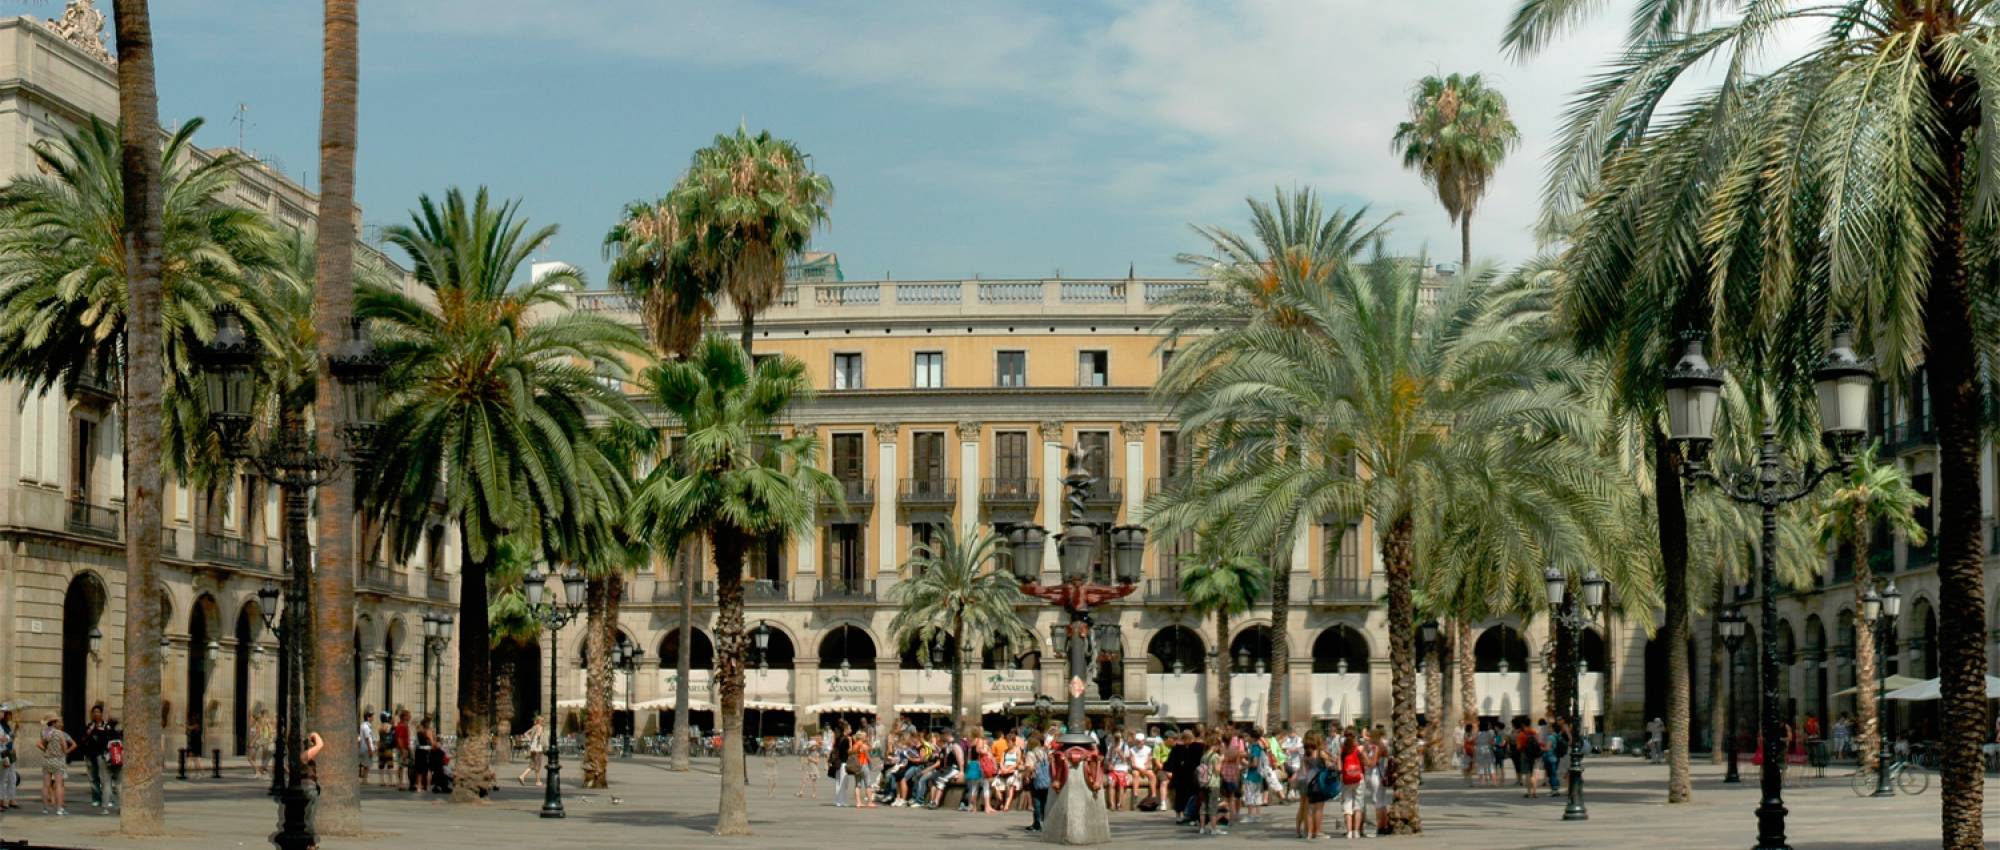 Plaza Reial de Barcelona (detalle). CC BY-SA 3.0 - Josep Renalias / Wikimedia Commons